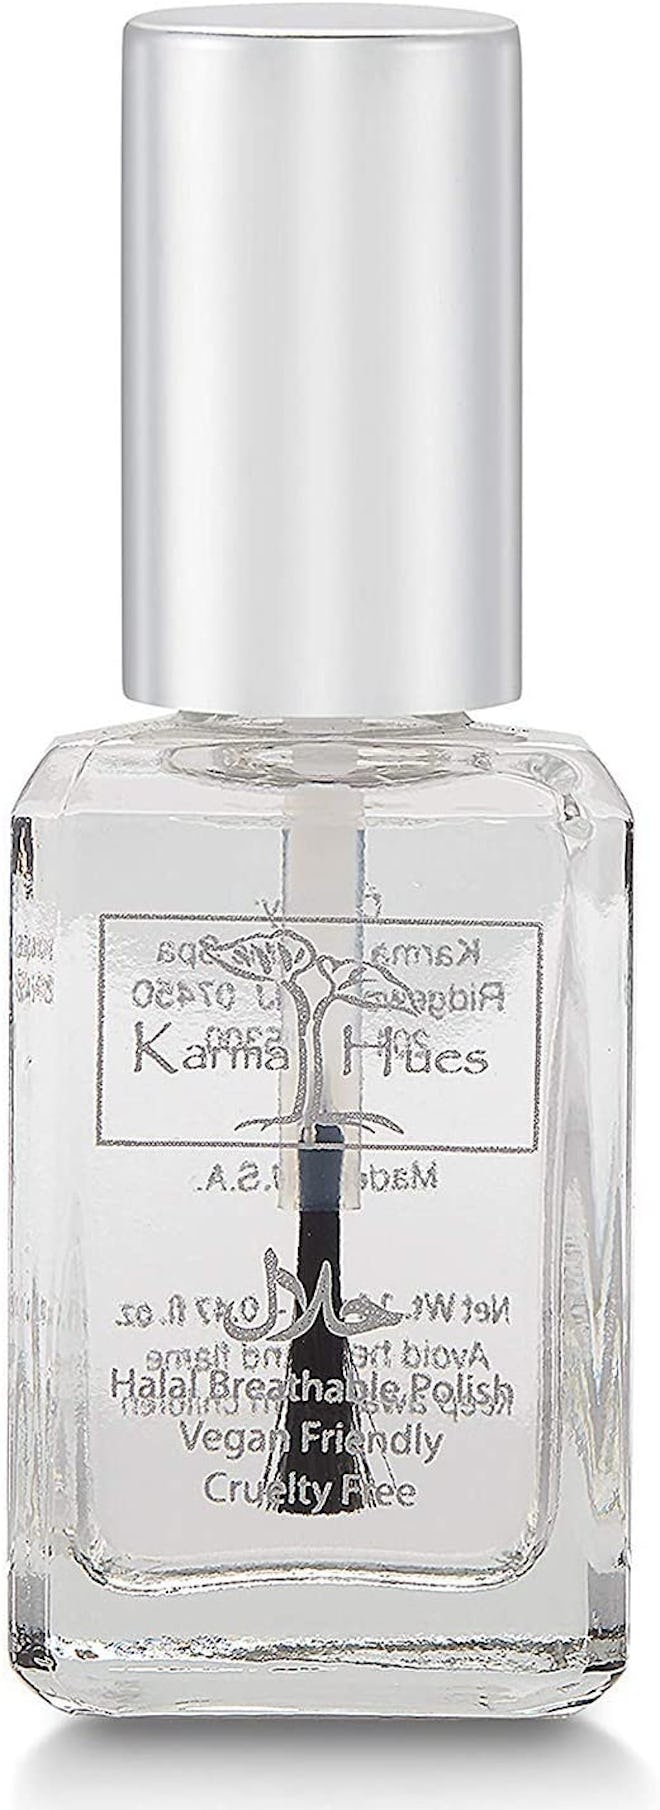 Karma Organic Clear Nail Polish 